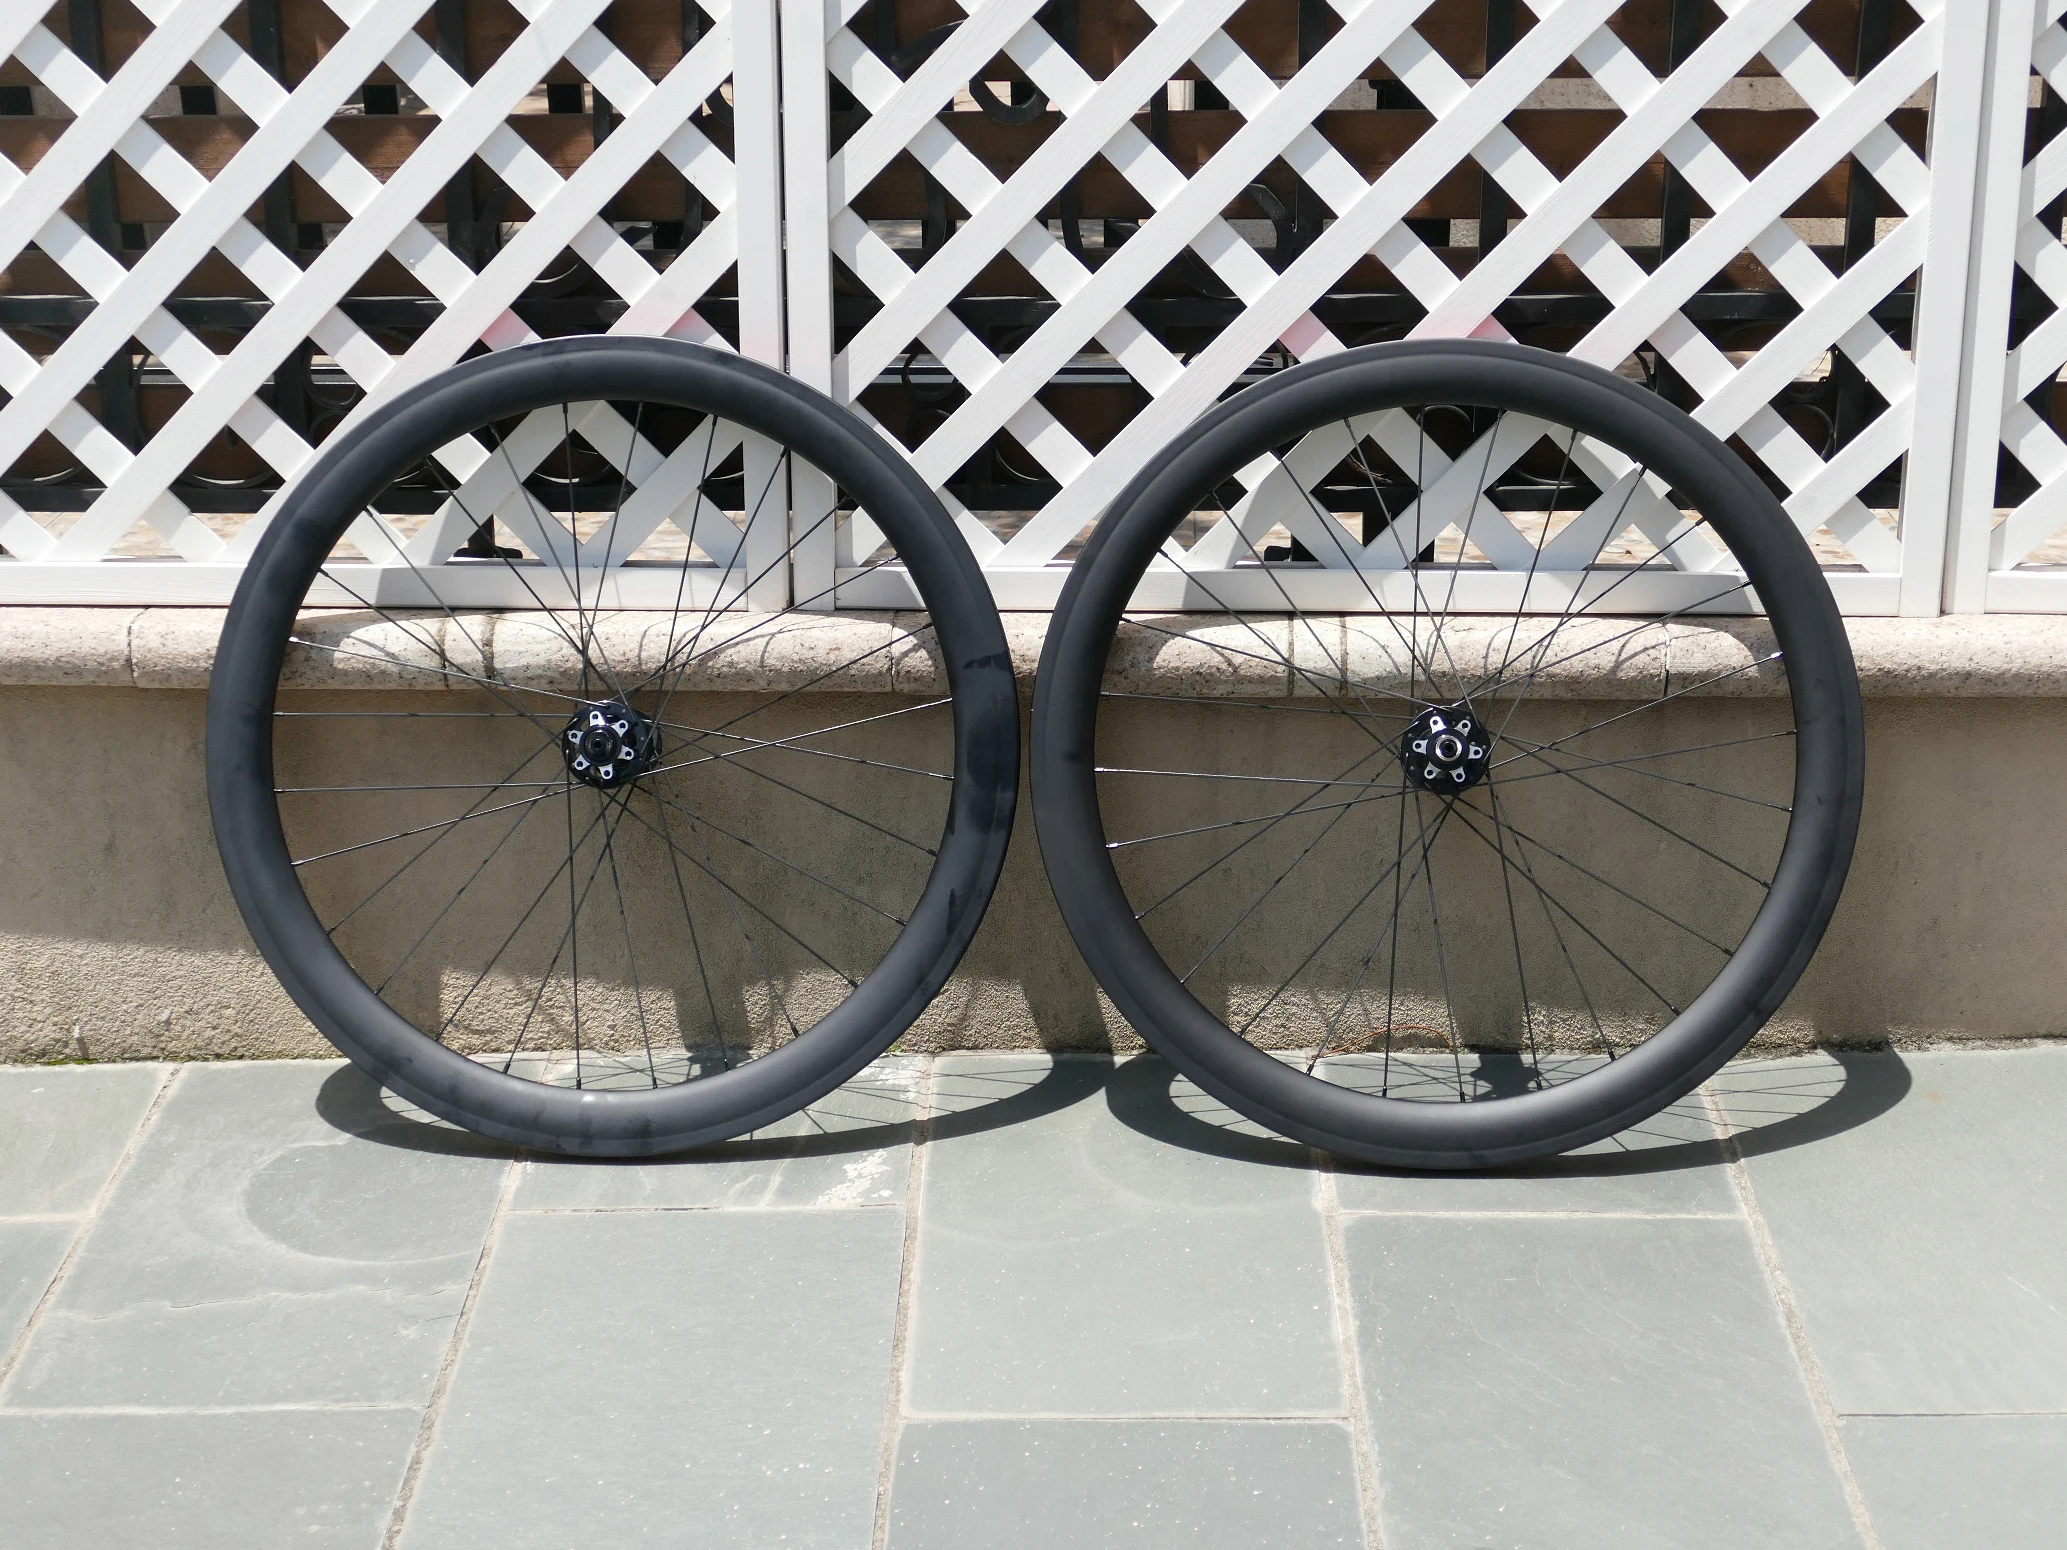 

Pair Ultra Light Wheel 50mm Full Carbon Road Cyclocross Bike Clincher Wheelset Disc Brake Thru Axle Front 100*12mm Rear 142*12mm